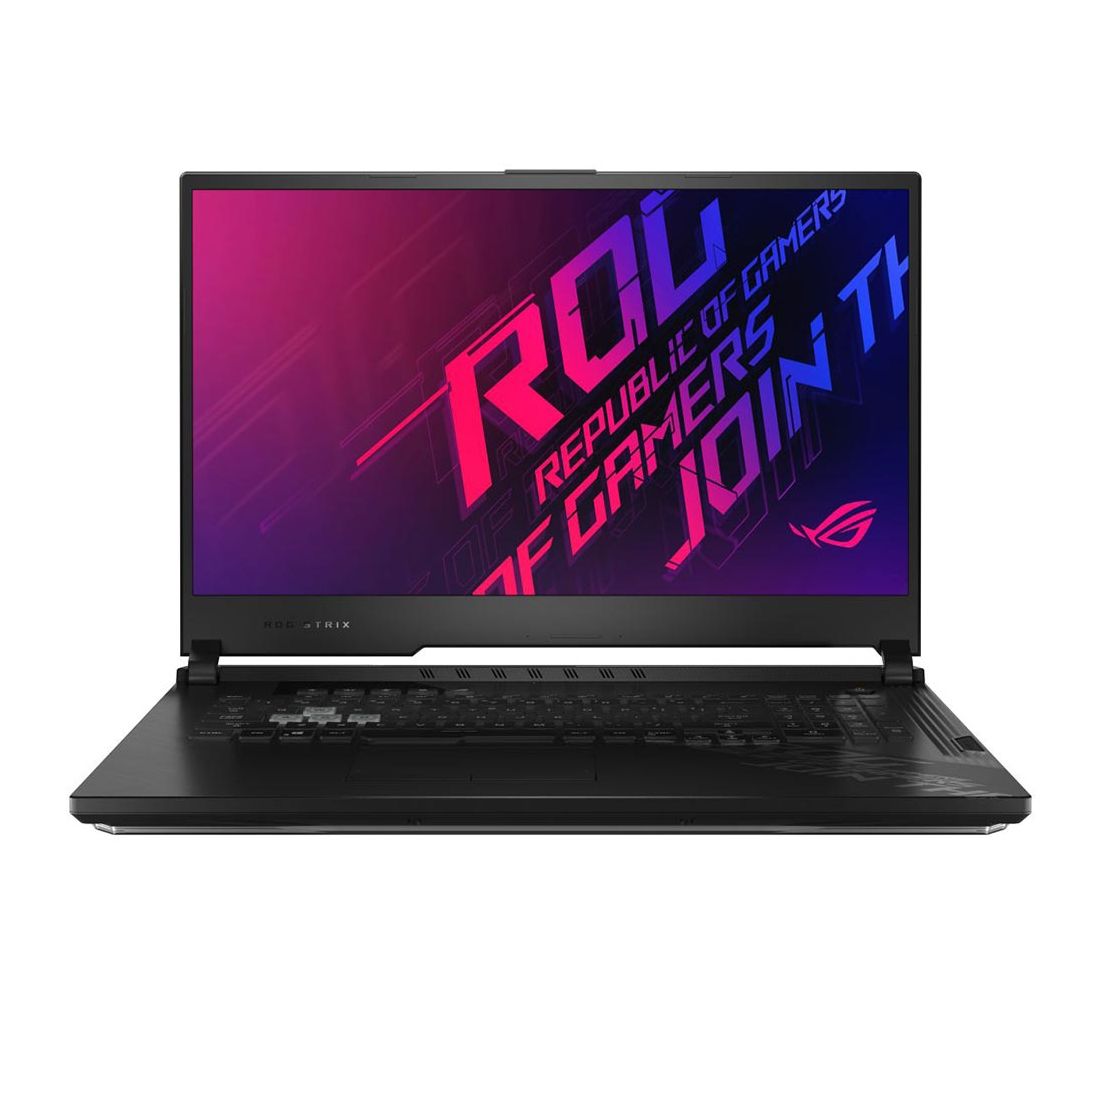 ASUS ROG Strix G17 I7-10750H Gaming Laptop 16GB/1TB SSD/NVIDIA GeForce RTX 2060 6GB/17.3 FHD Display/144Hz/Windows 10/Original Black